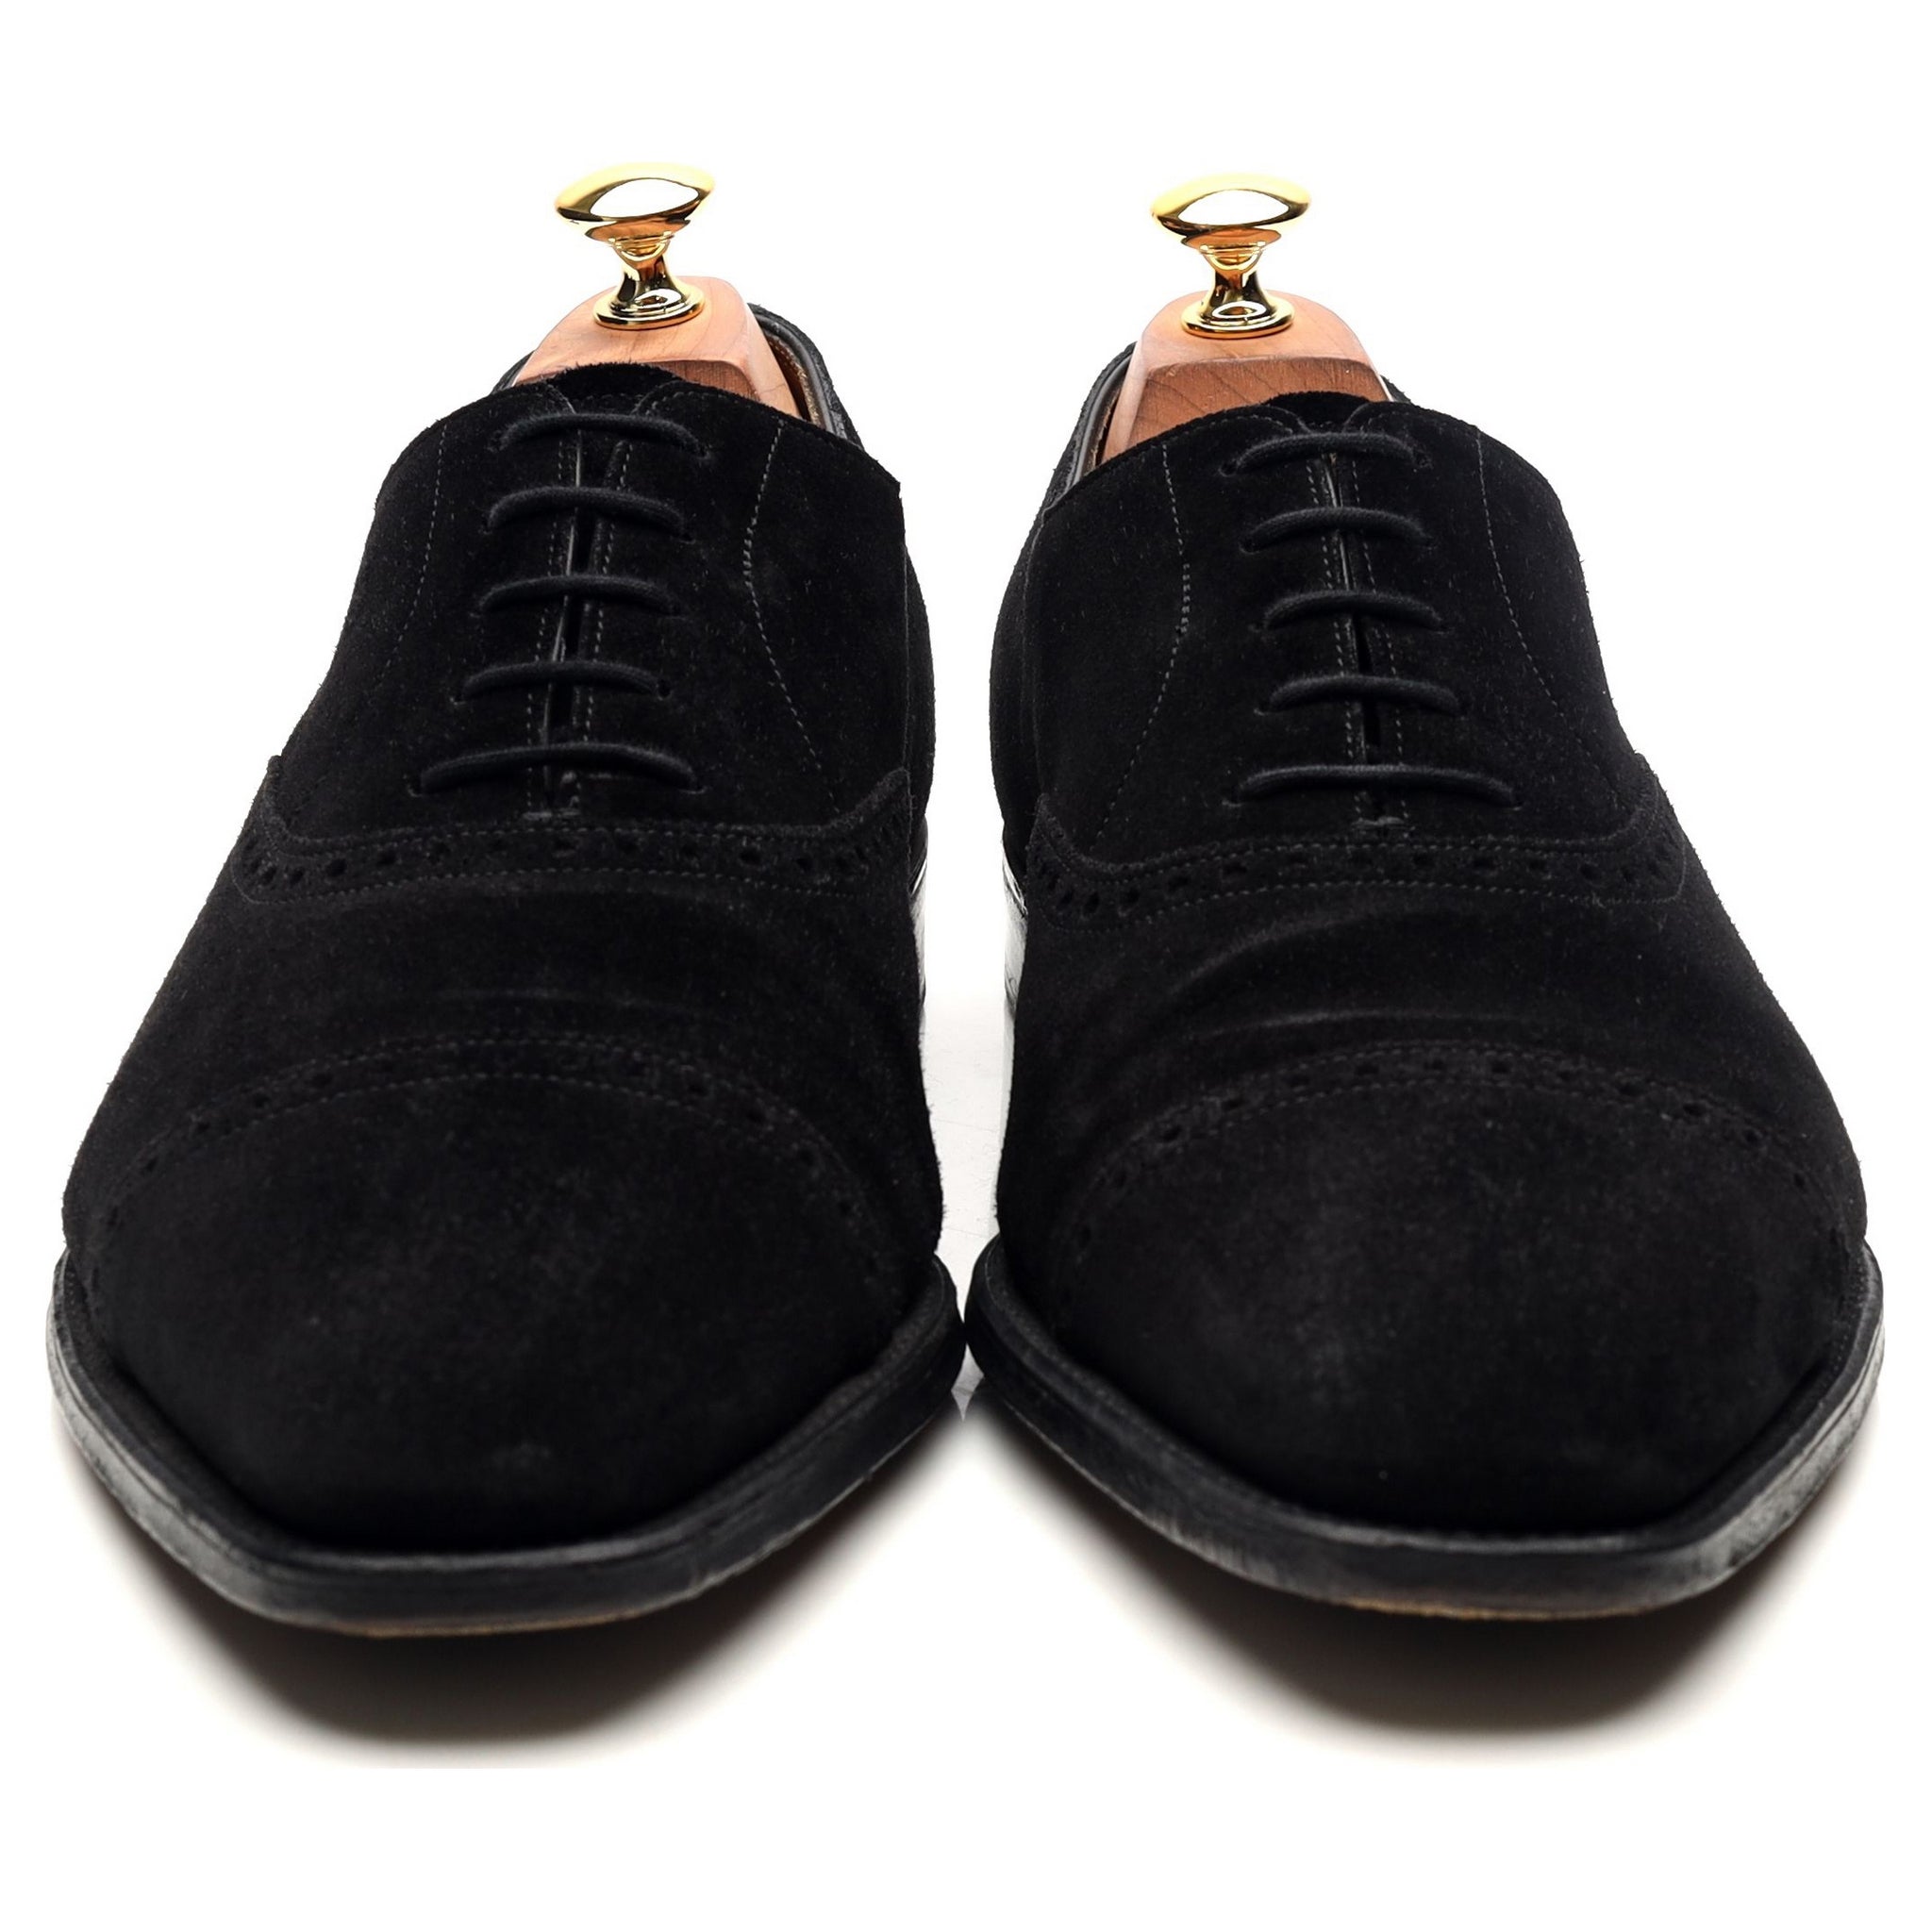 Avon' Black Suede Oxford UK 10 E - Abbot's Shoes